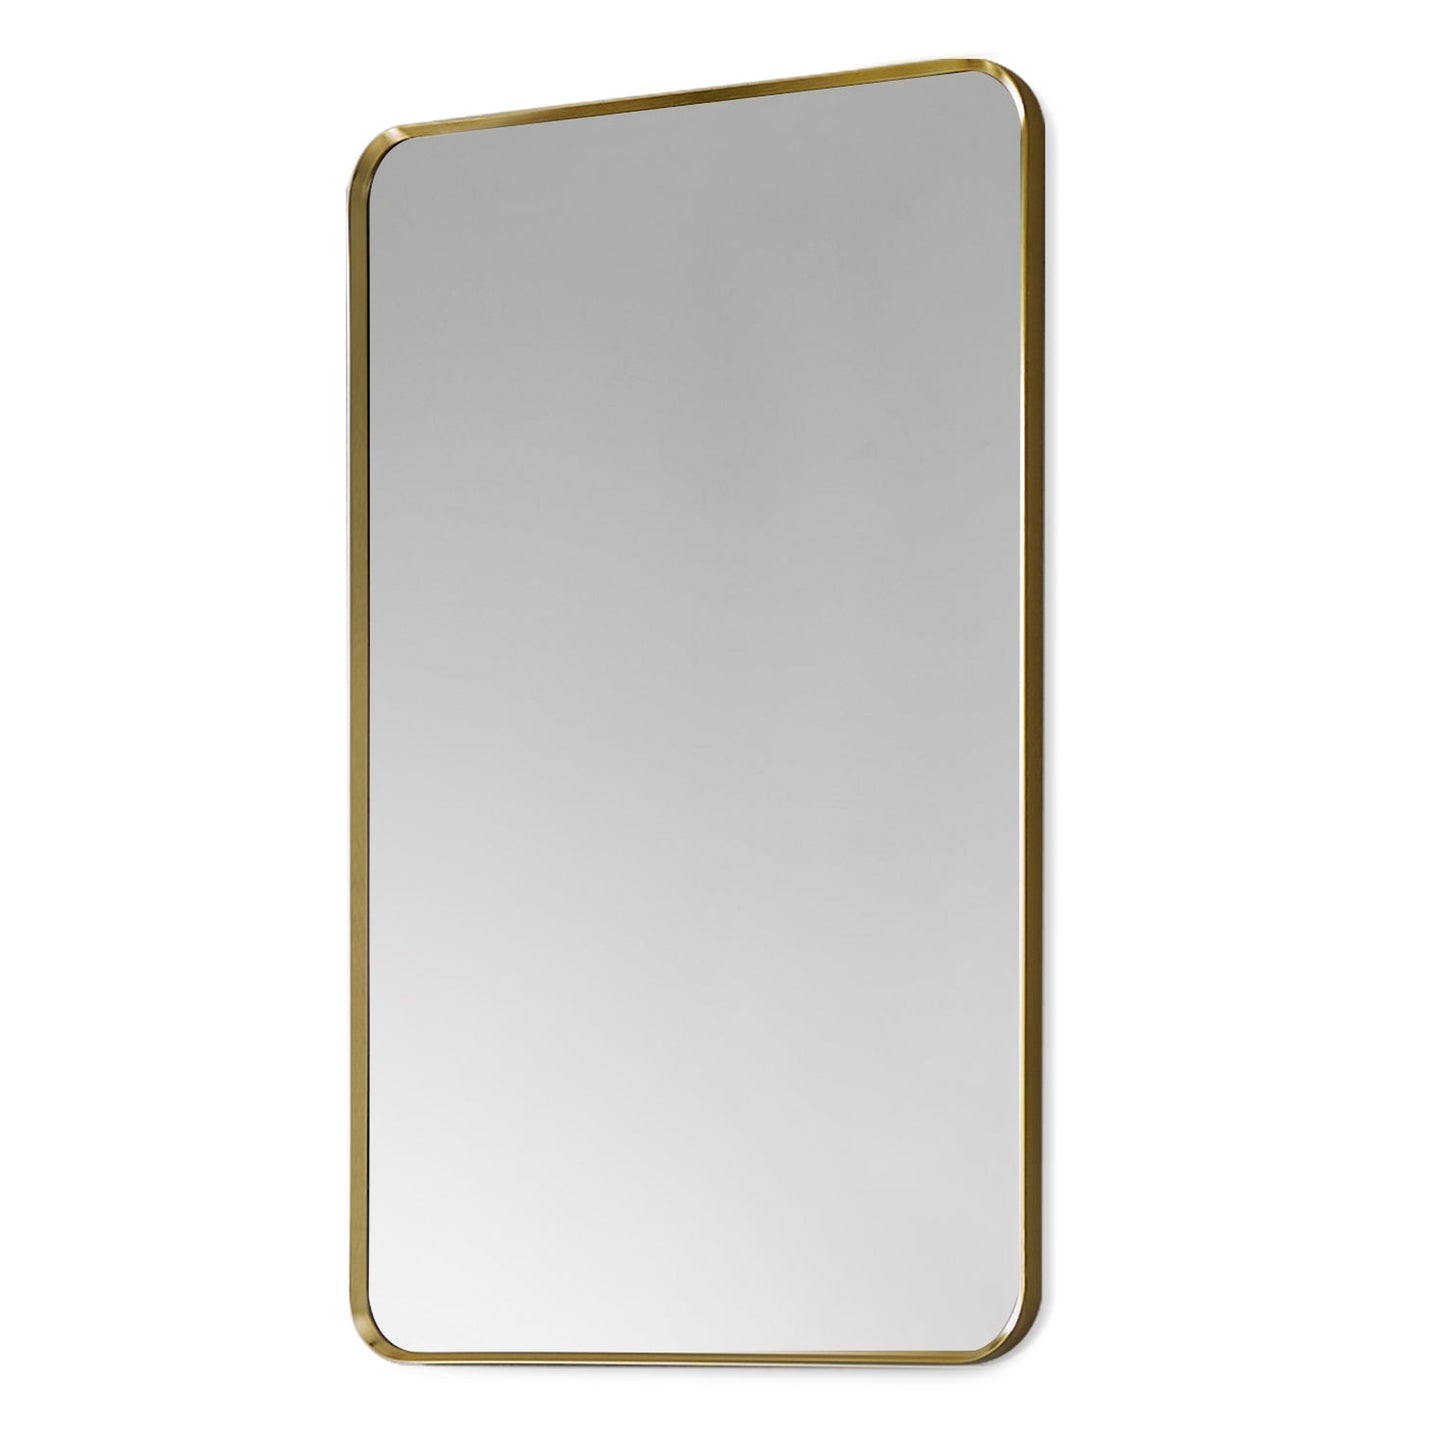 Nettuno 18" Rectangle Bathroom/Vanity Brushed Gold Aluminum Framed Wall Mirror